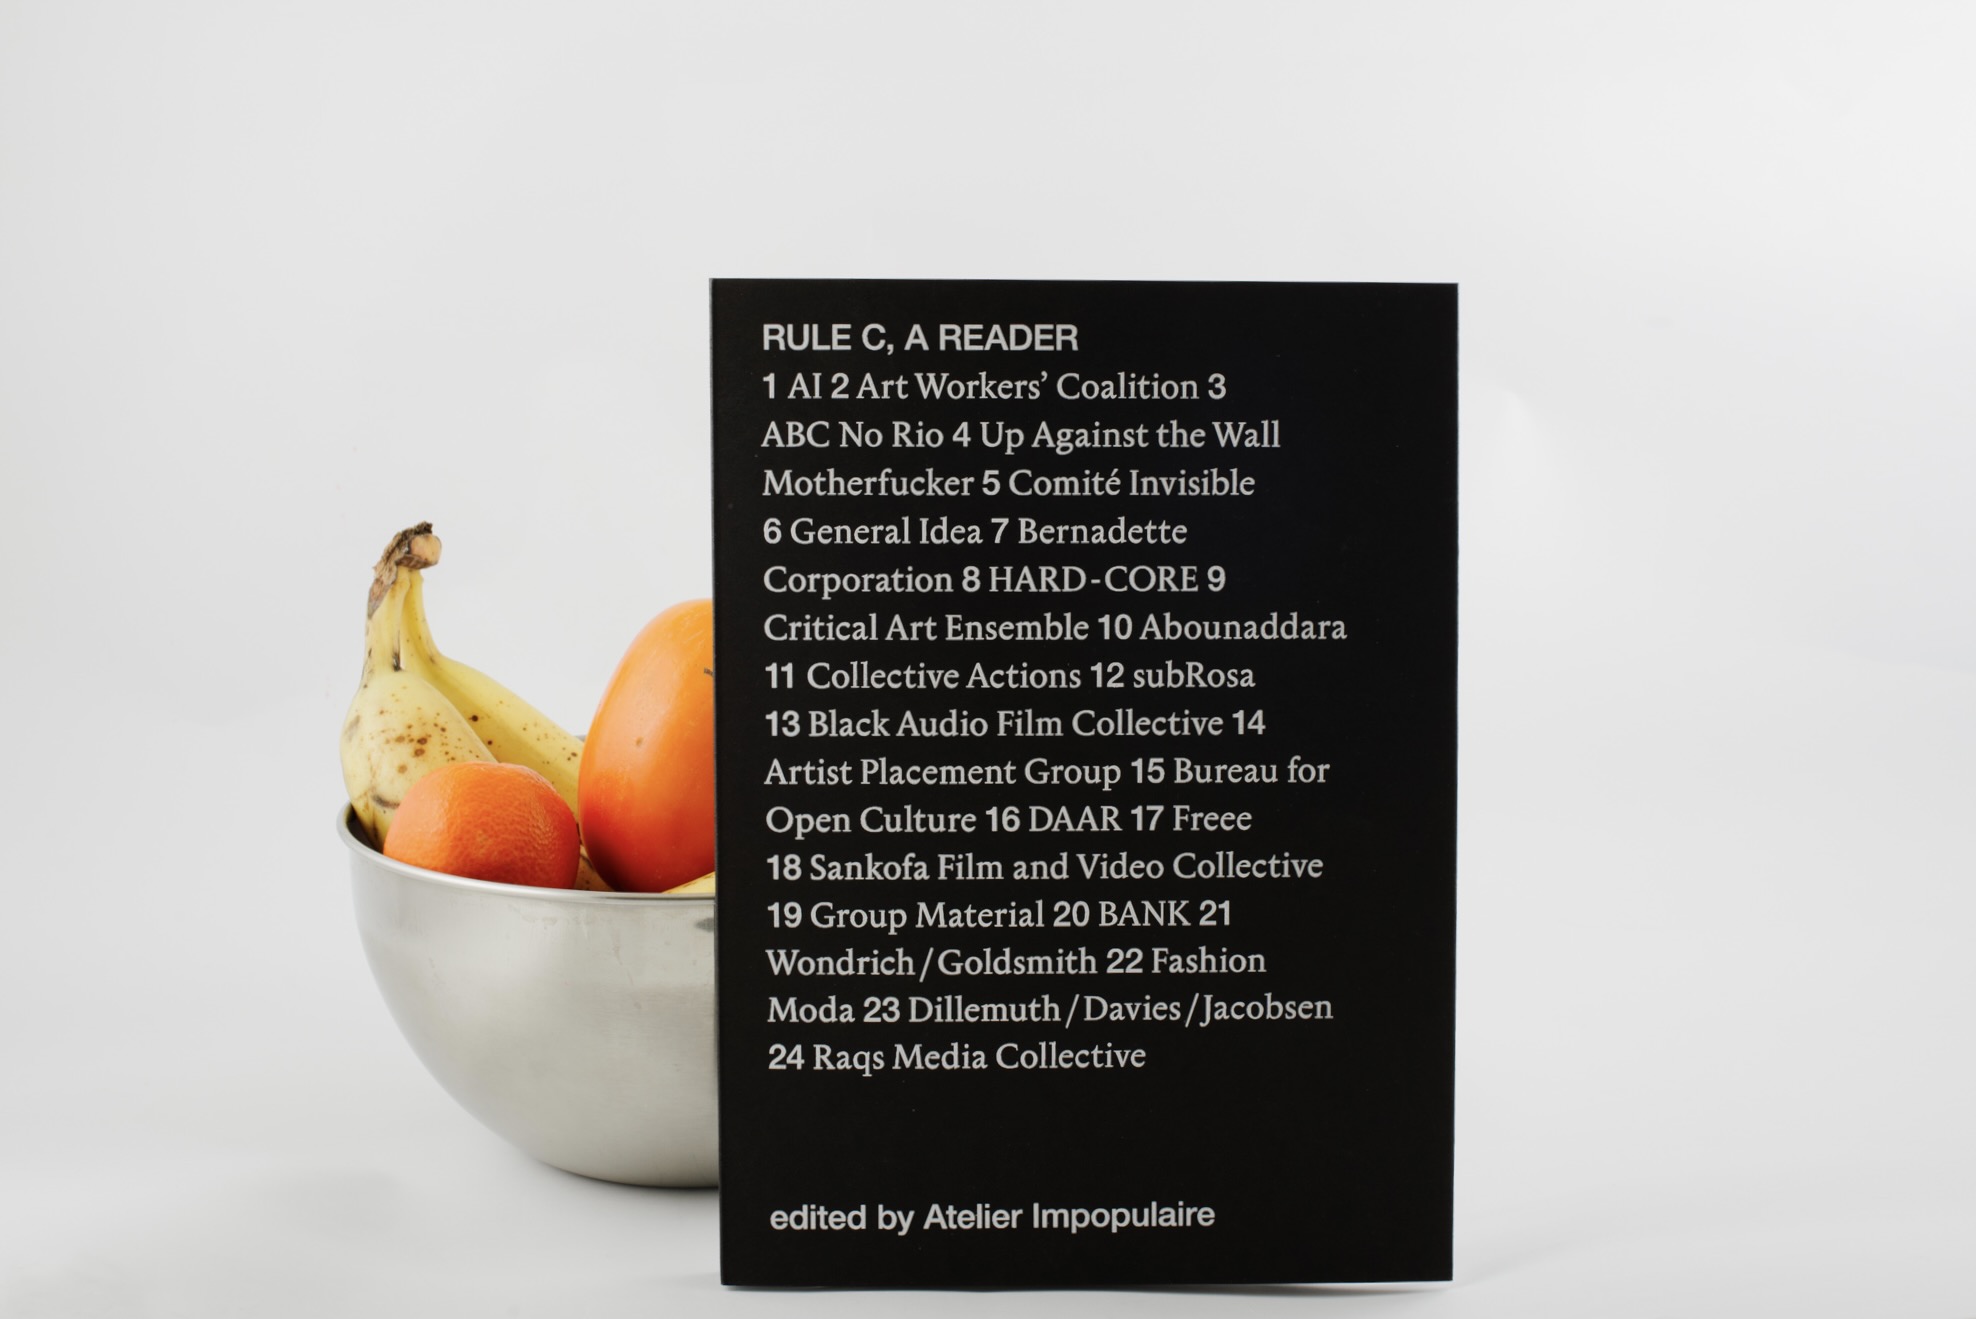 RULE C A READER — Atelier Impopulaire